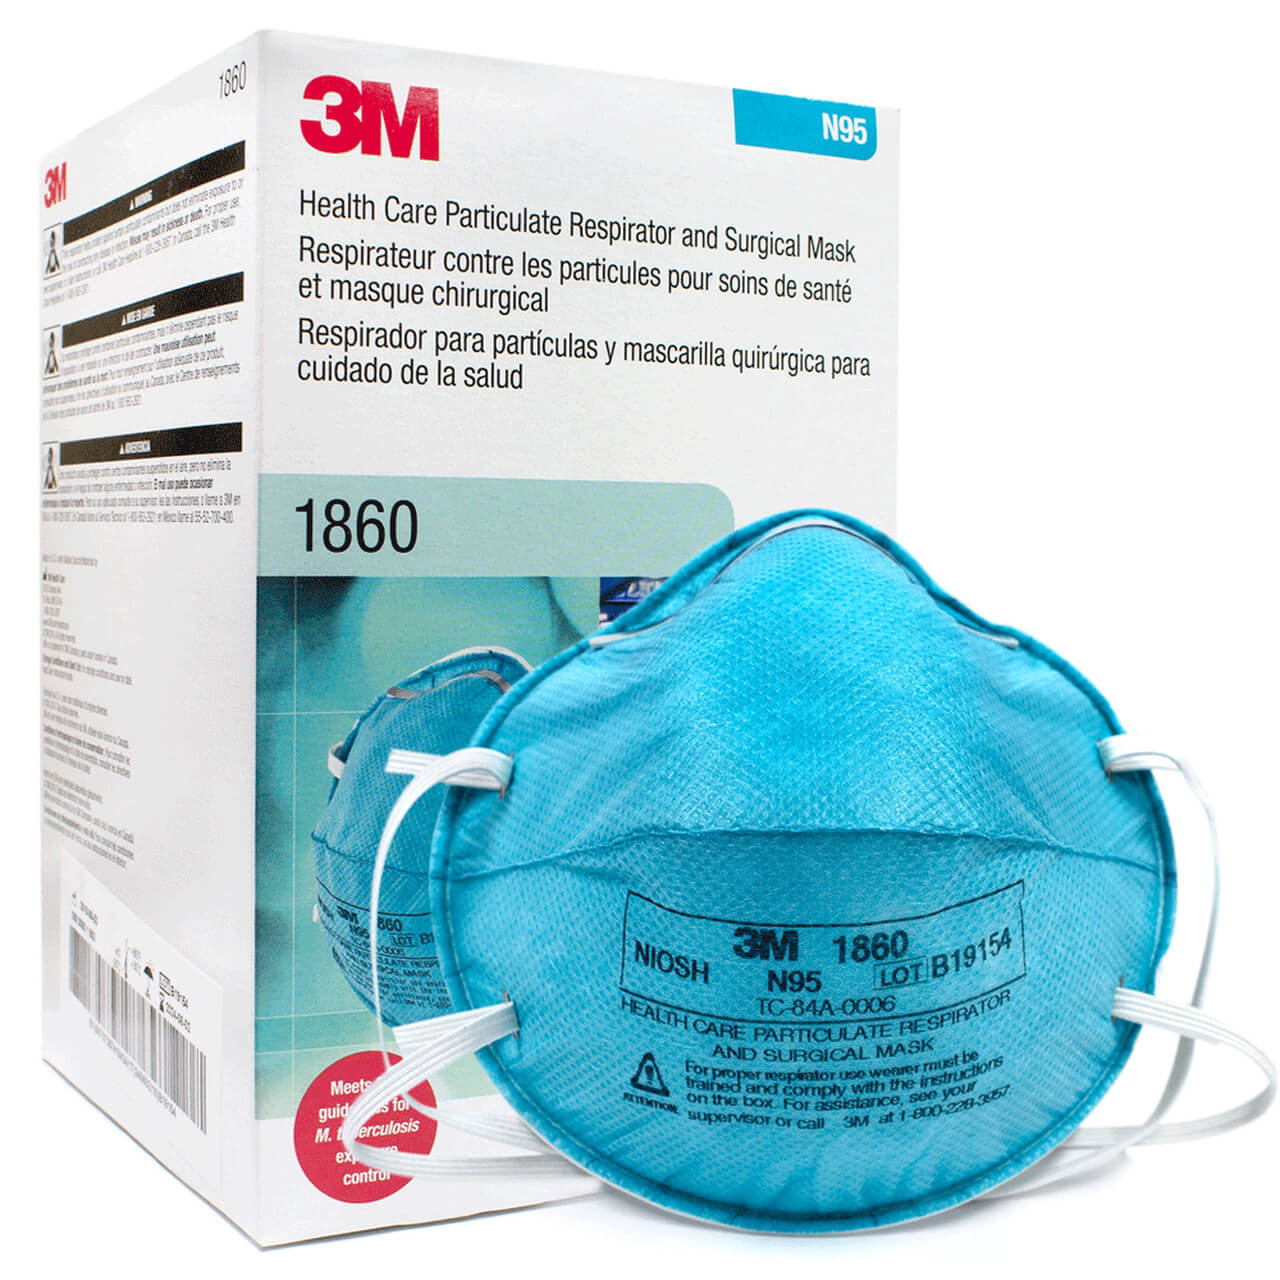 3m-1860-n95-medical-surgical-mask-standard-20-masks-usa-made-pacmedpro